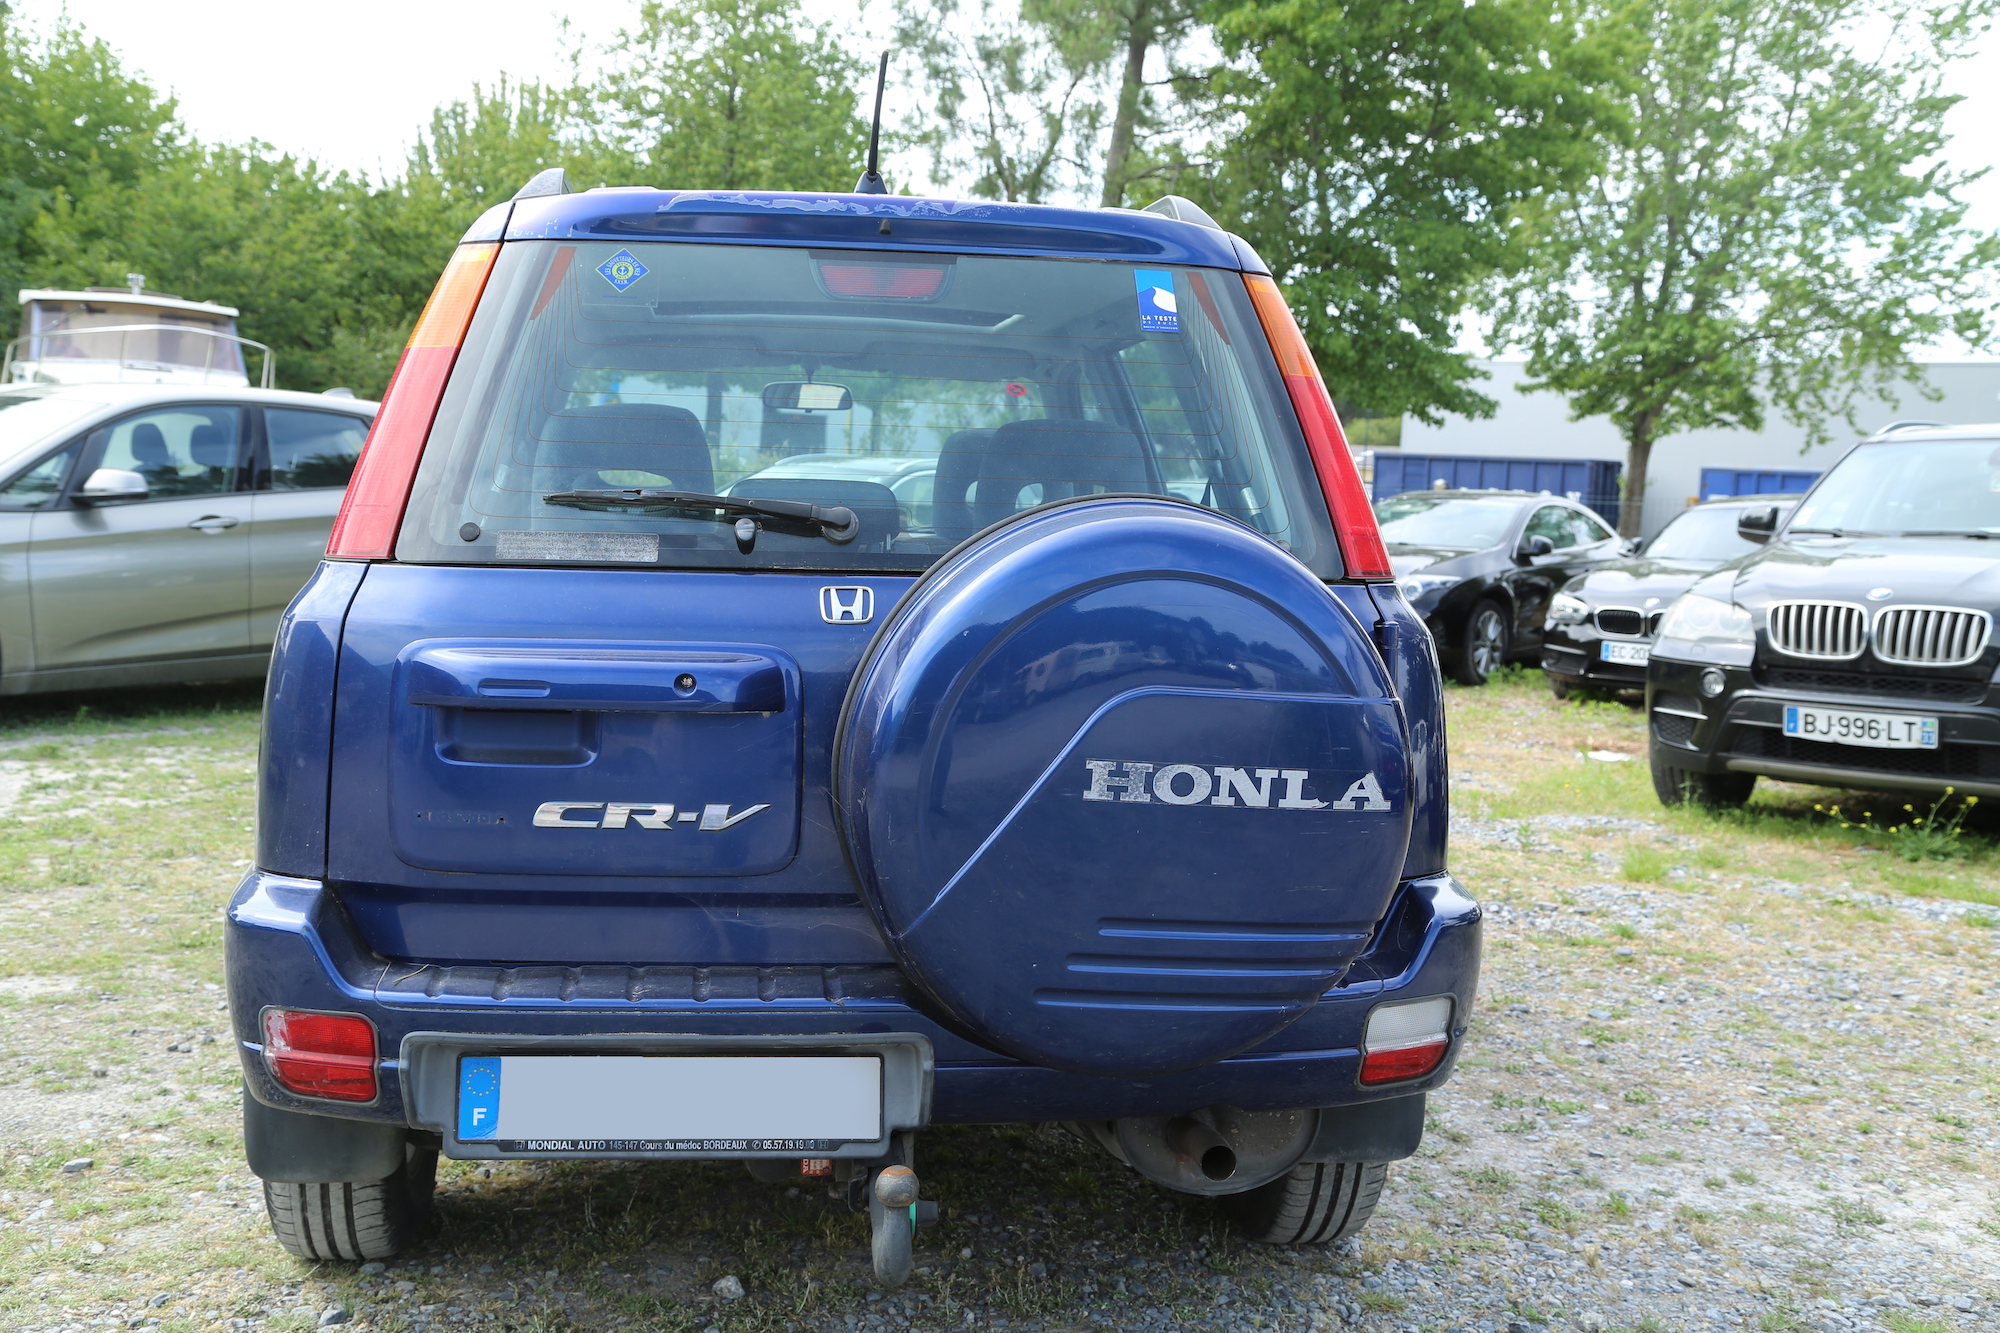 A vendre Honda CRV break 4x4 de 1999